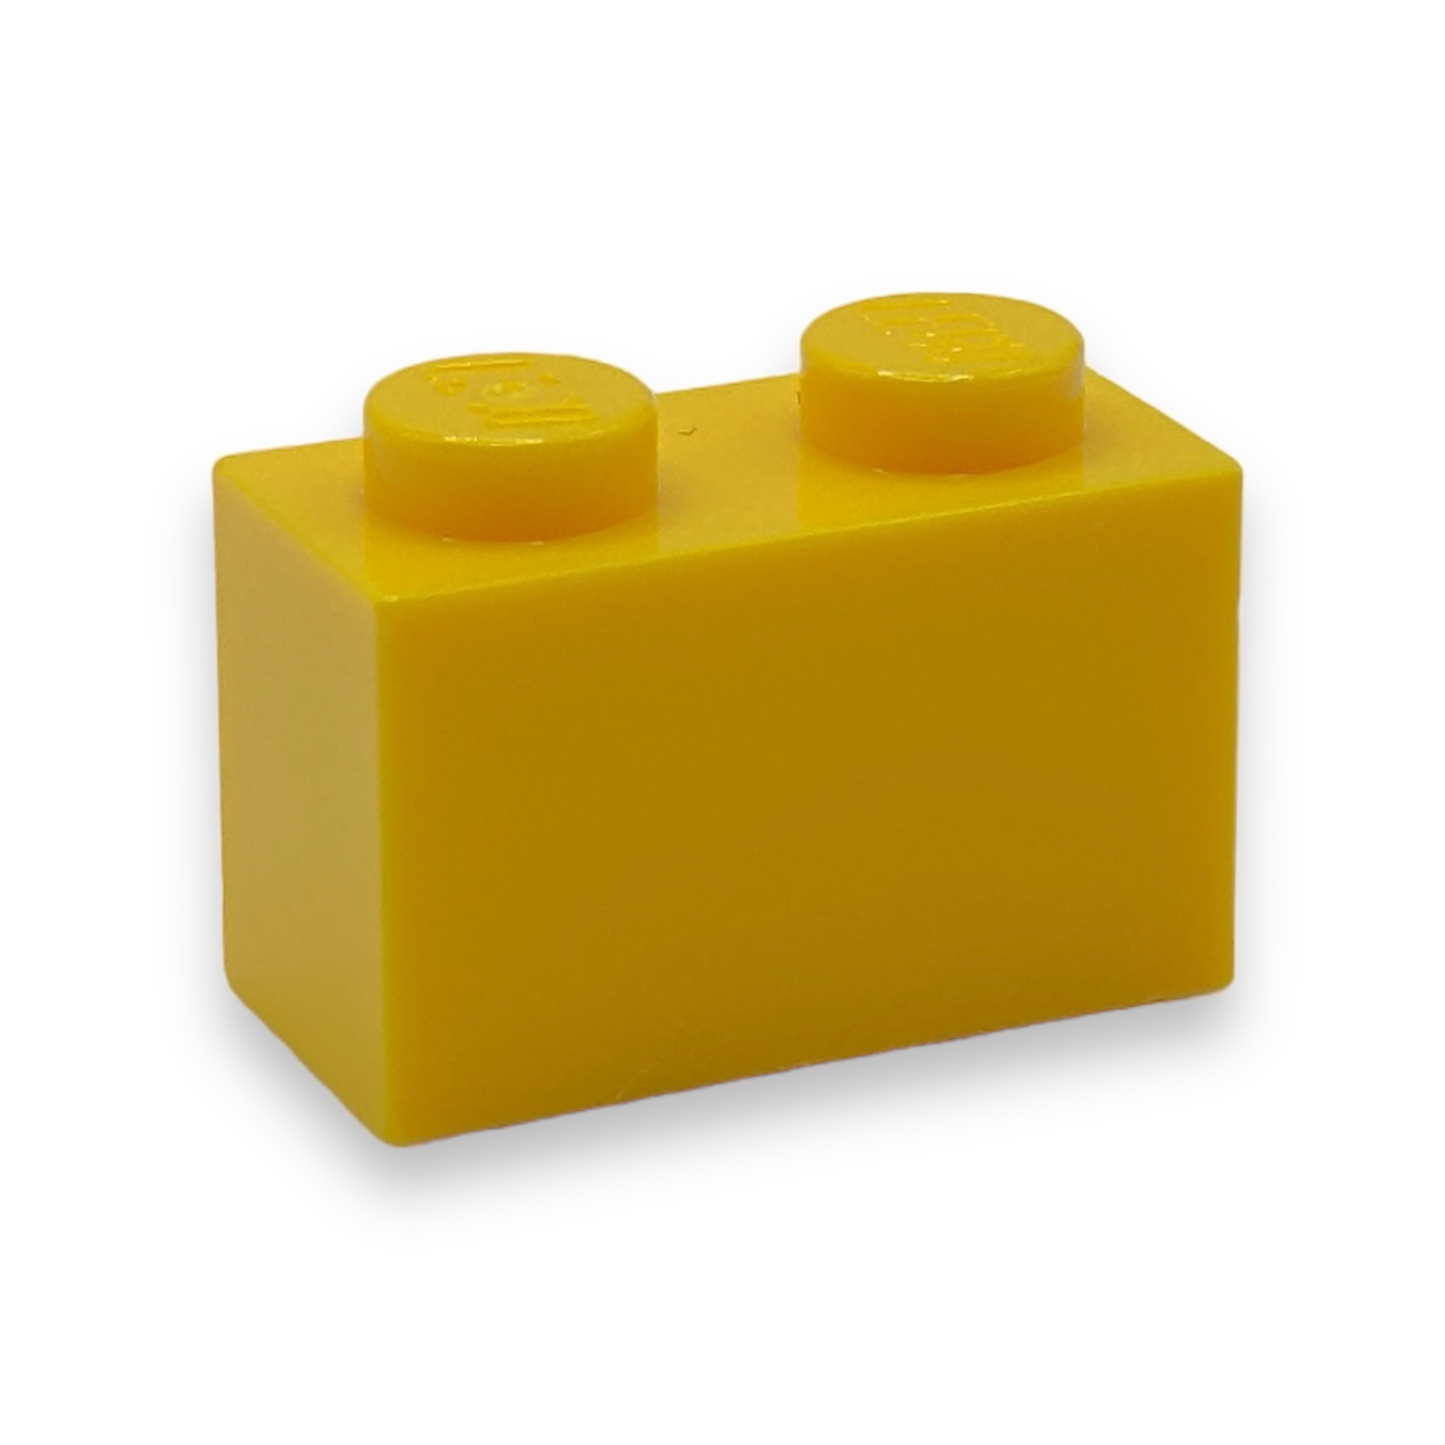 LEGO Brick 1x2 Yellow - White Question Mark Pattern